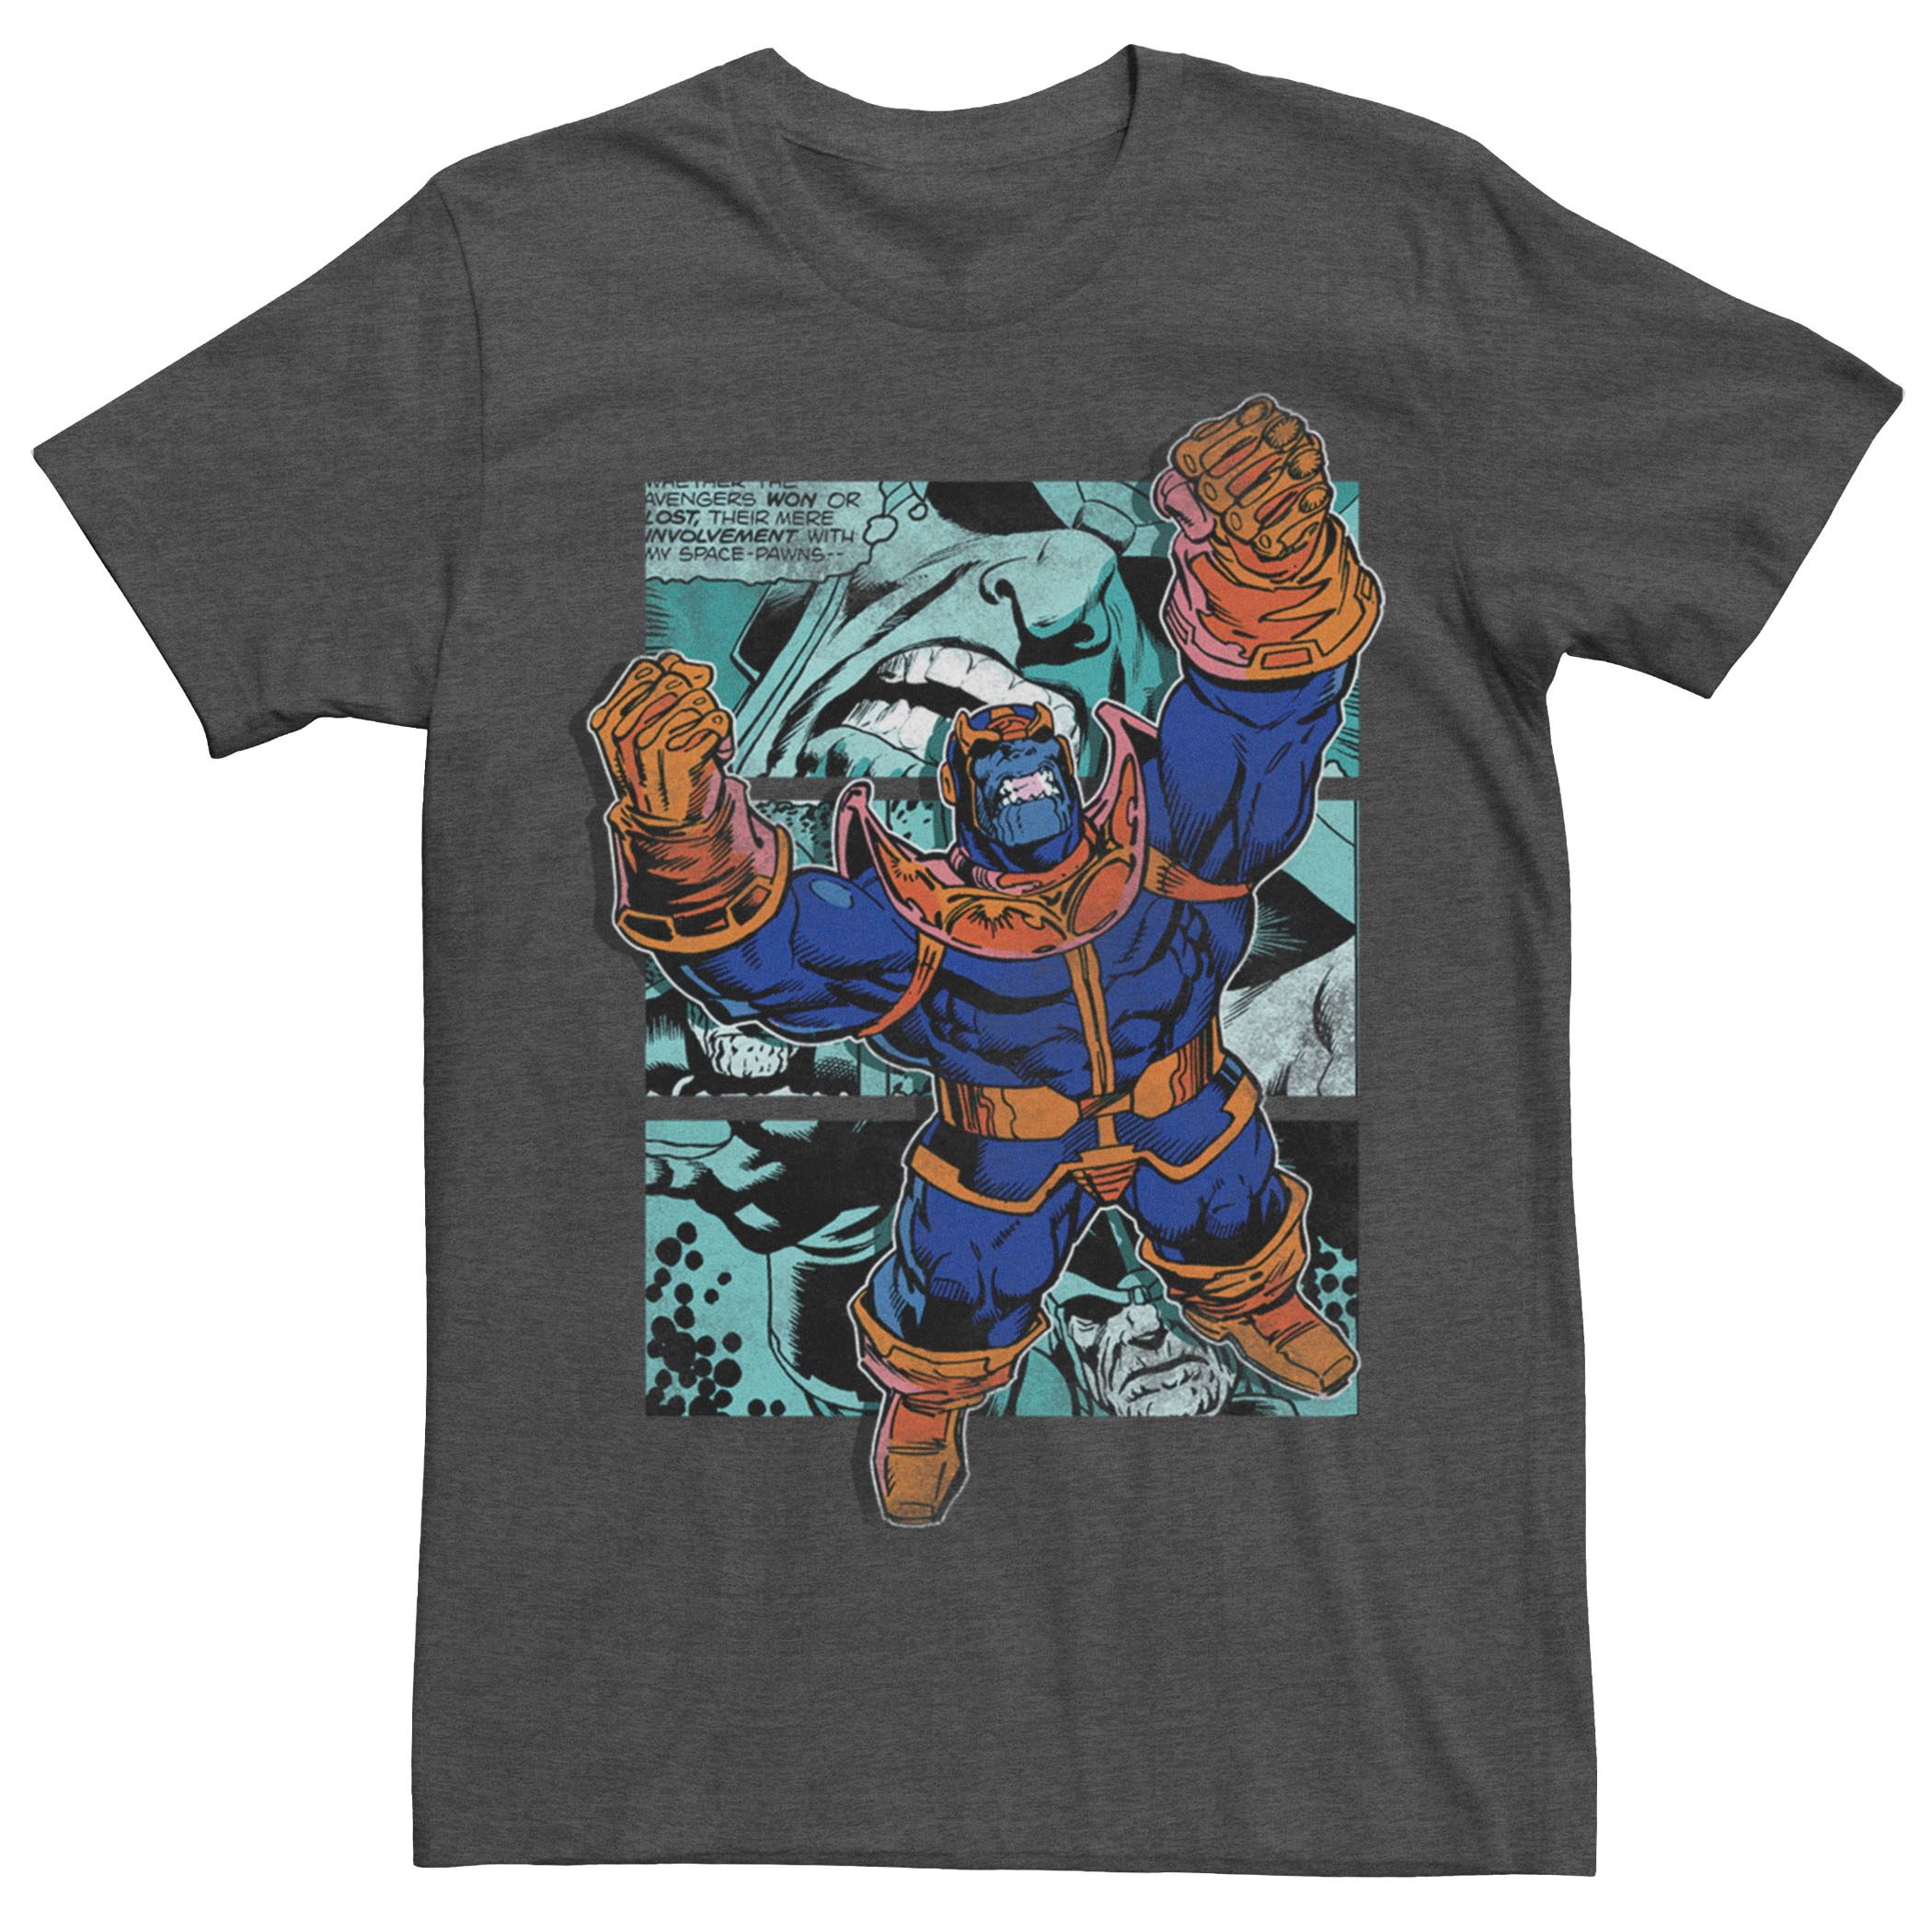 Мужская футболка с графическим рисунком Marvel Thanos